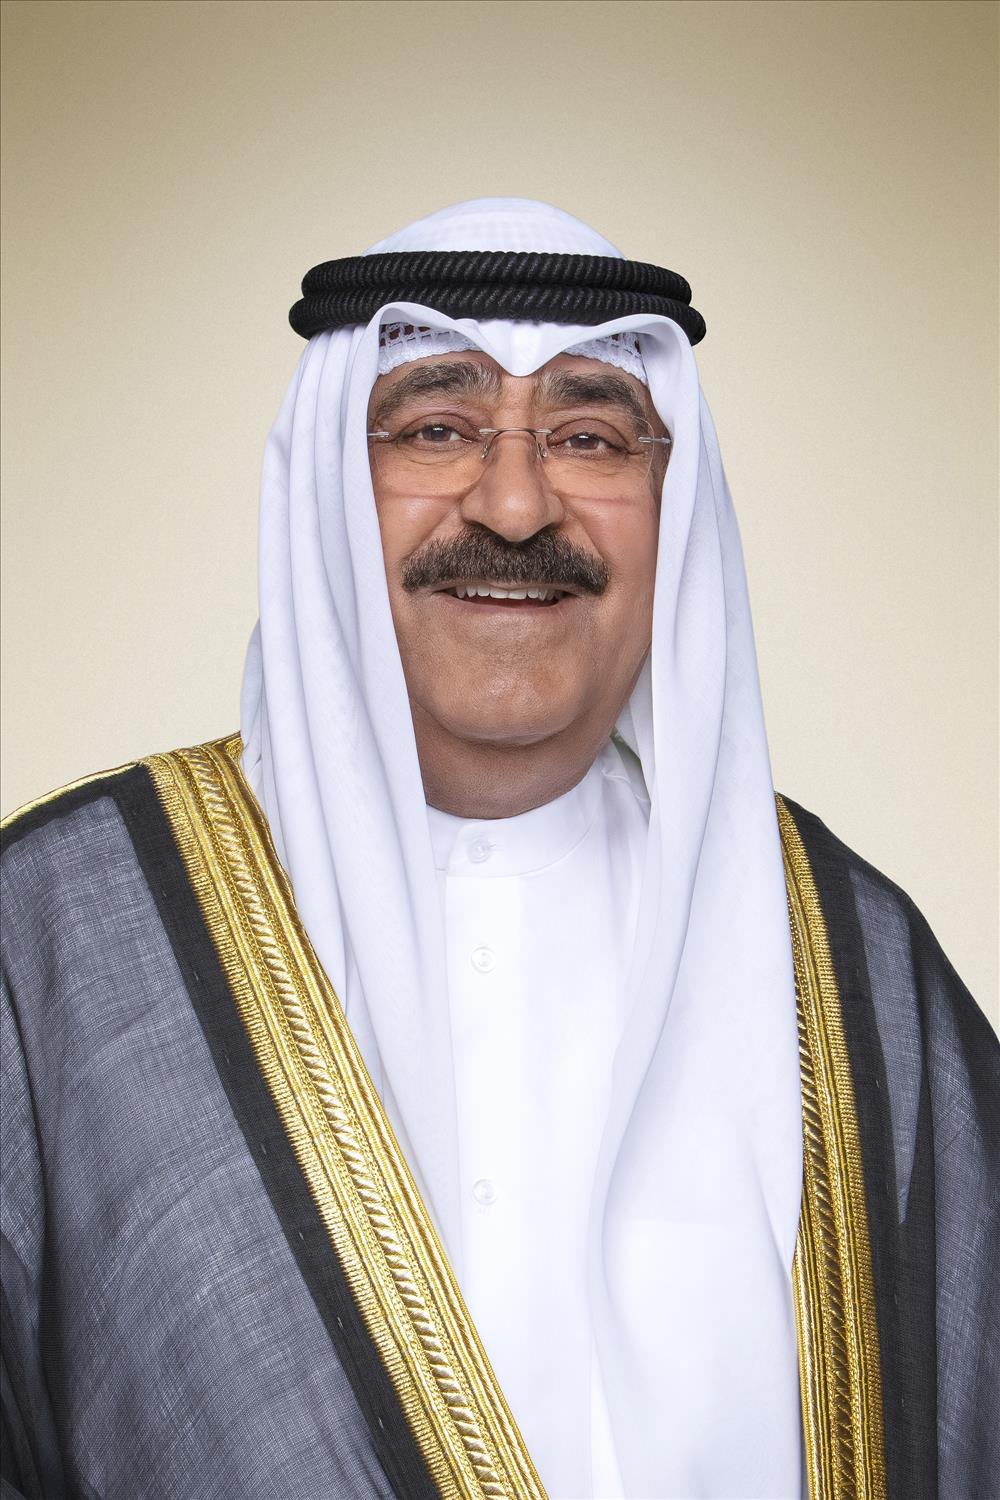 Kuwait Crown Prince Congratulates Trinidad And Tobago President-Elect